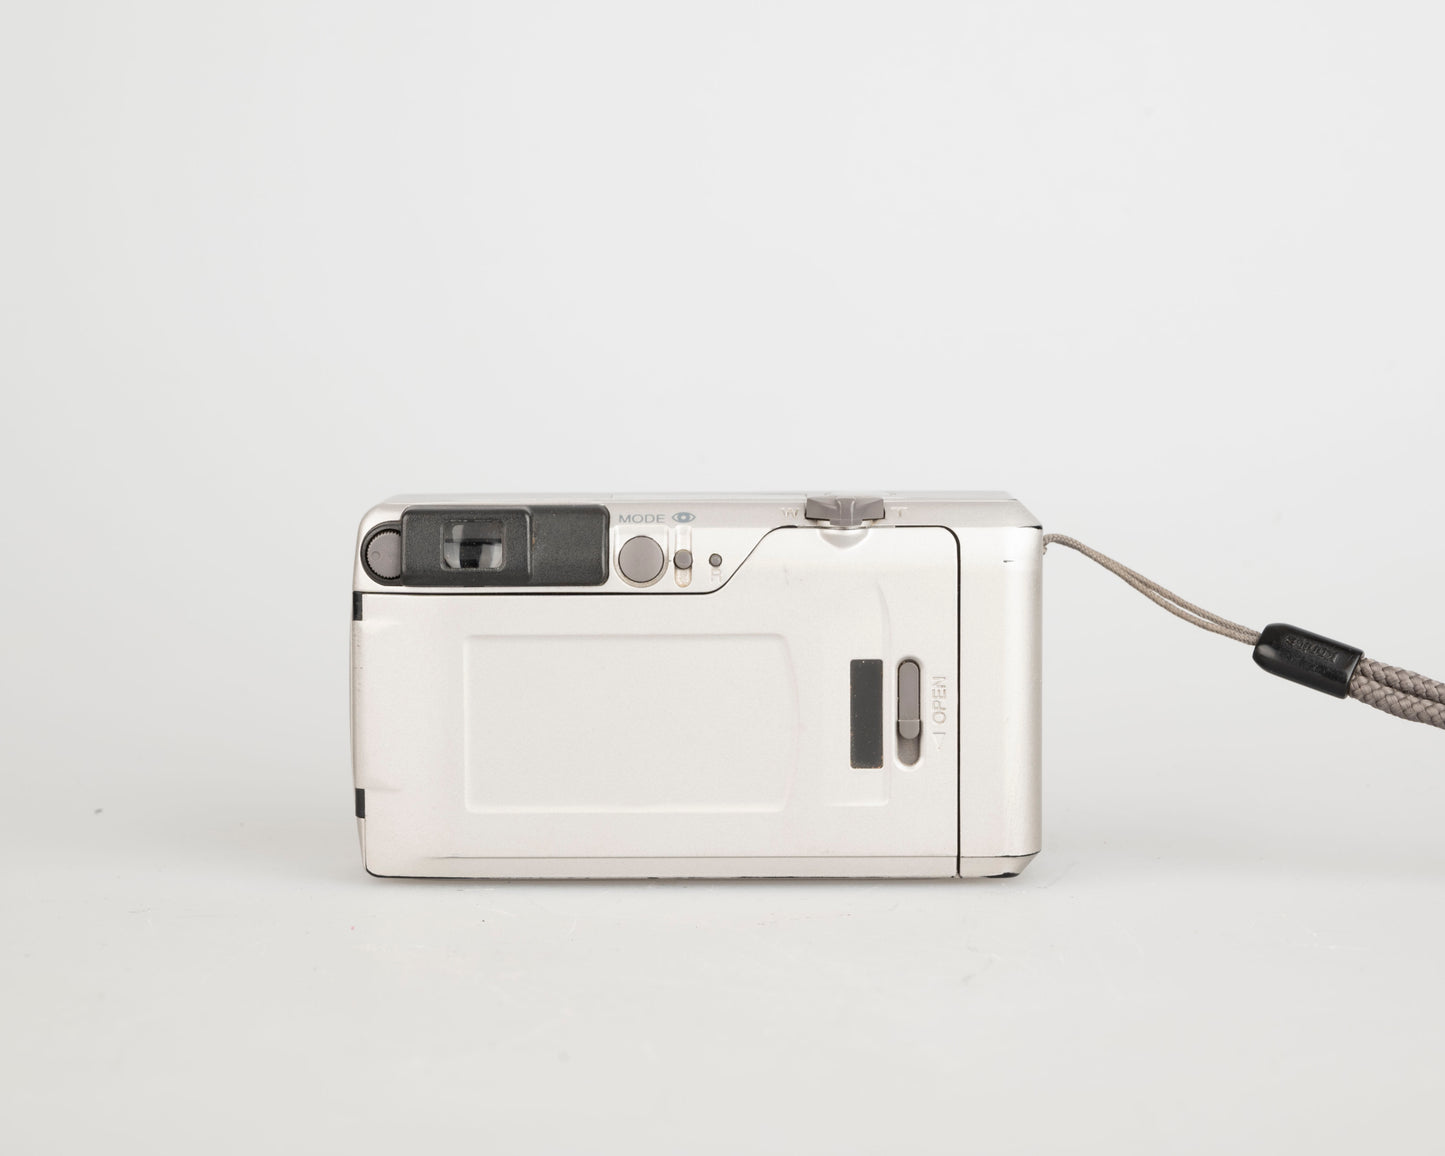 Konica Lexio 70 compact 35mm camera w/ case (serial 6685579)